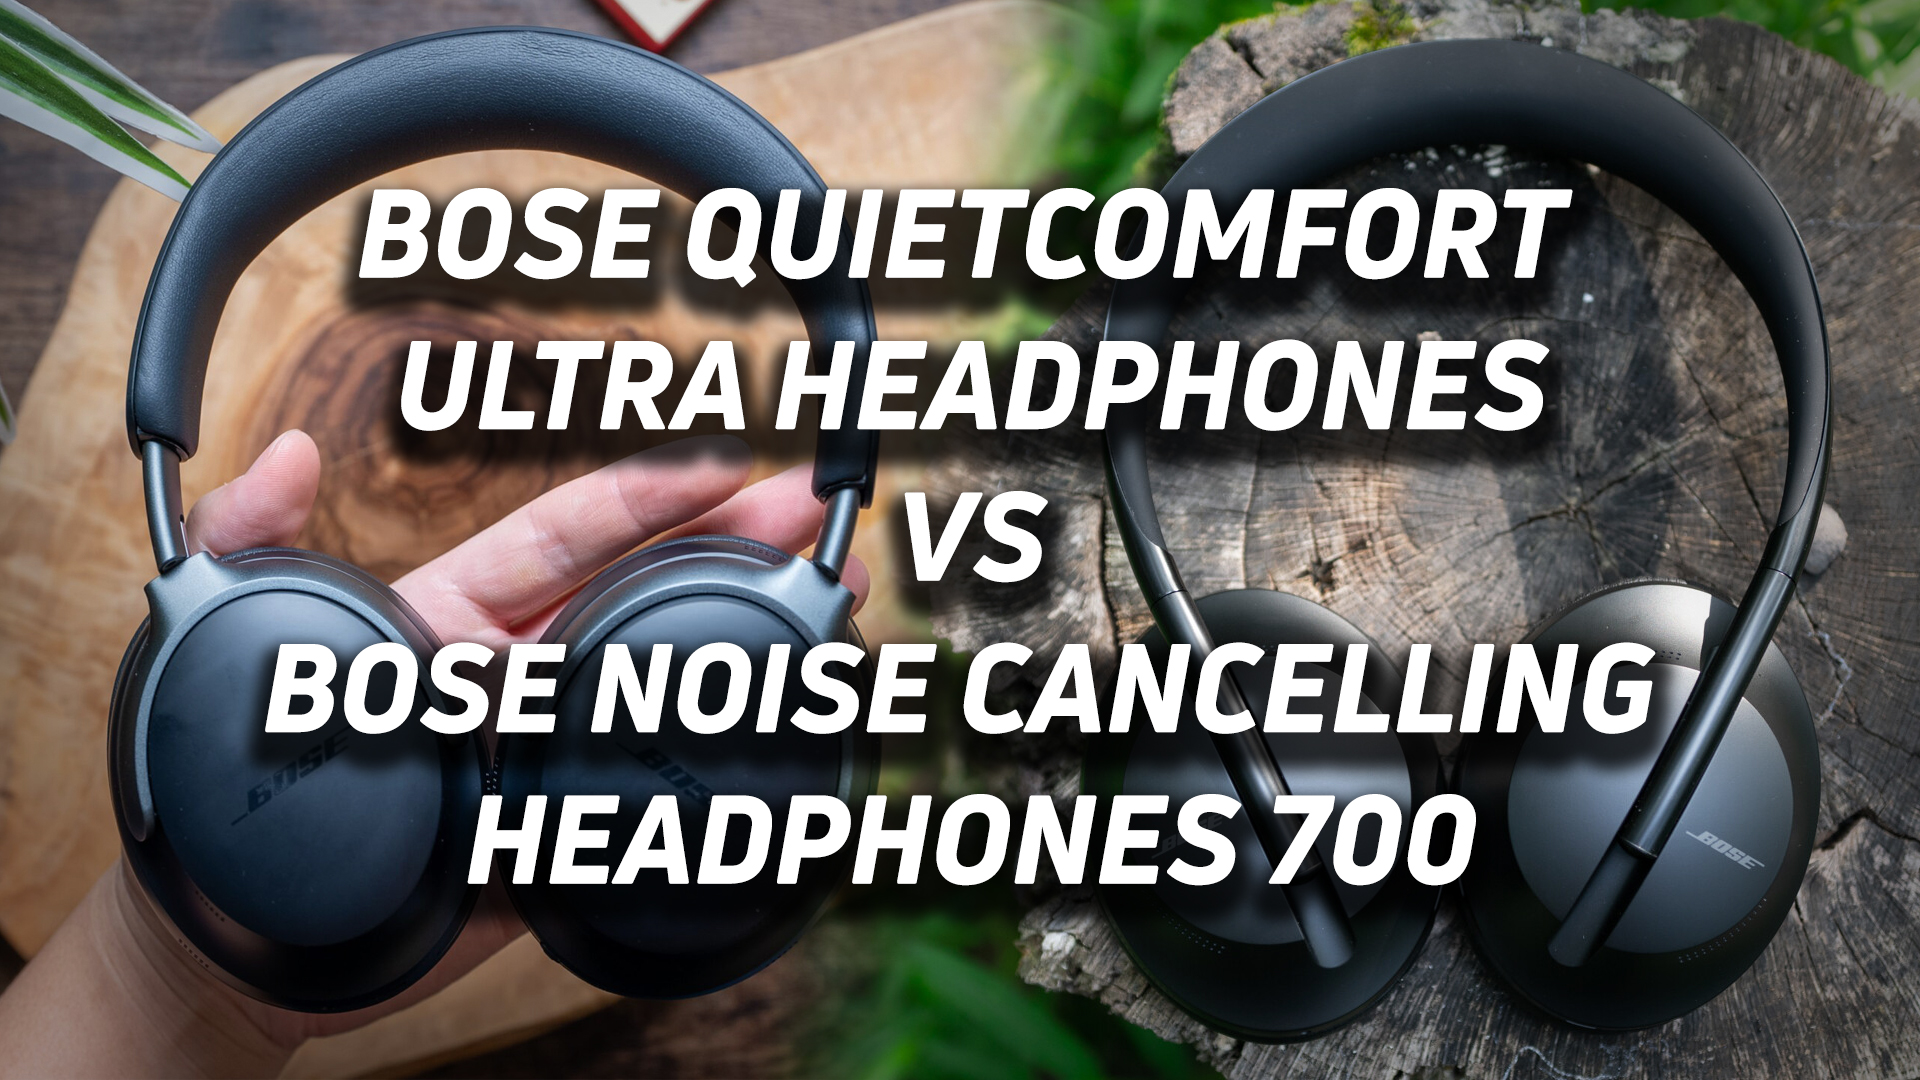 Bose QuietComfort Ultra vs QuietComfort : quelle est la différence